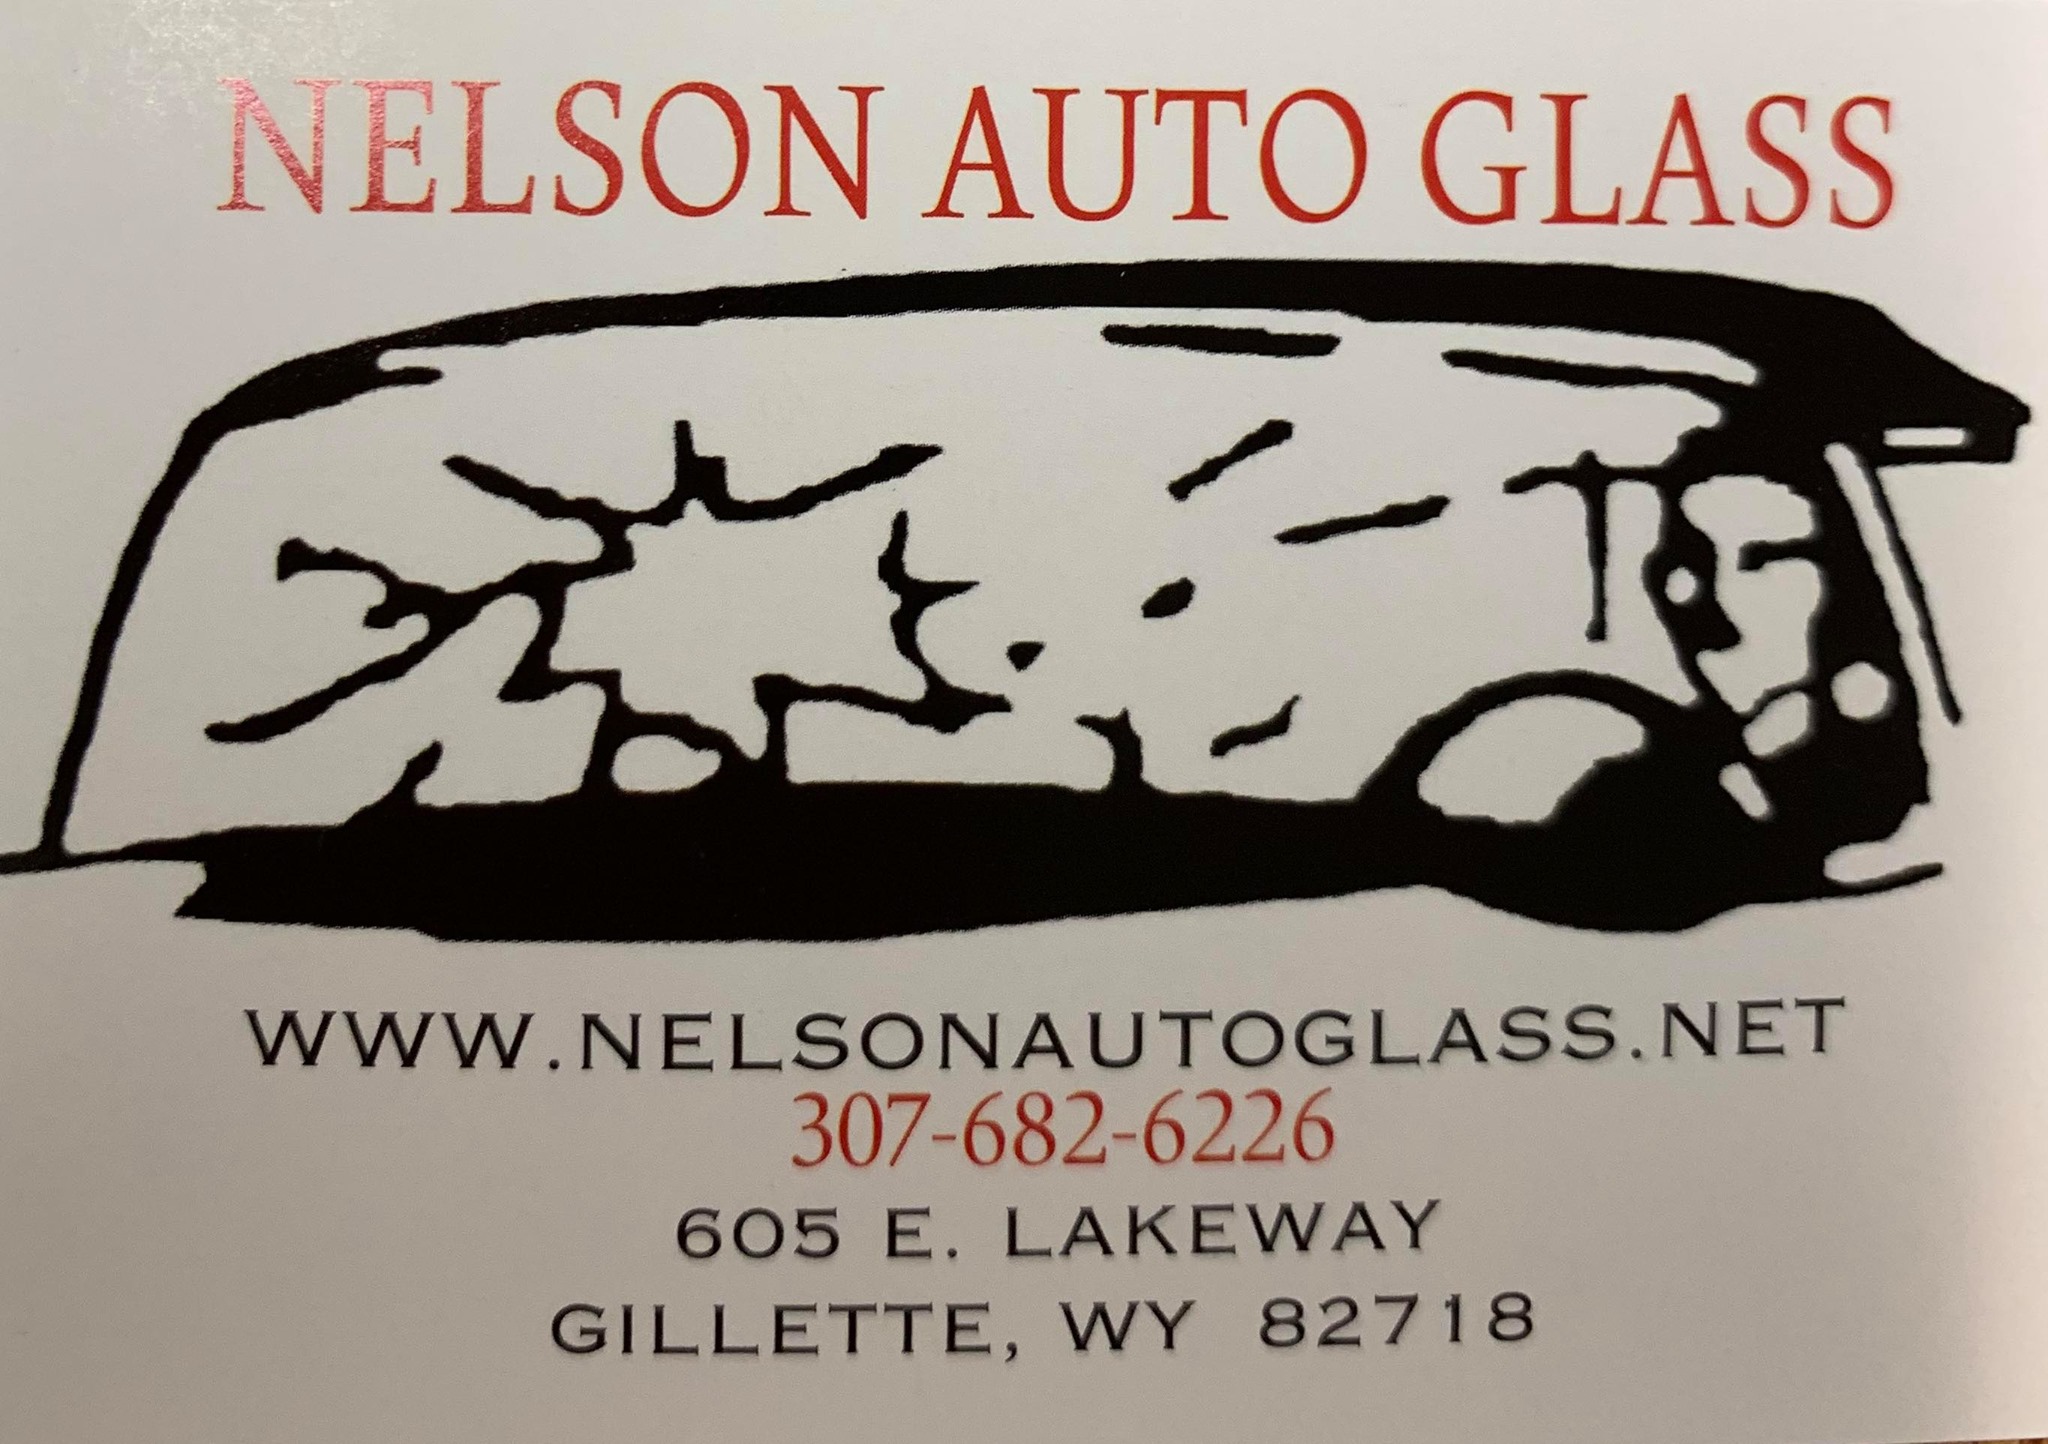 Nelson Auto Glass